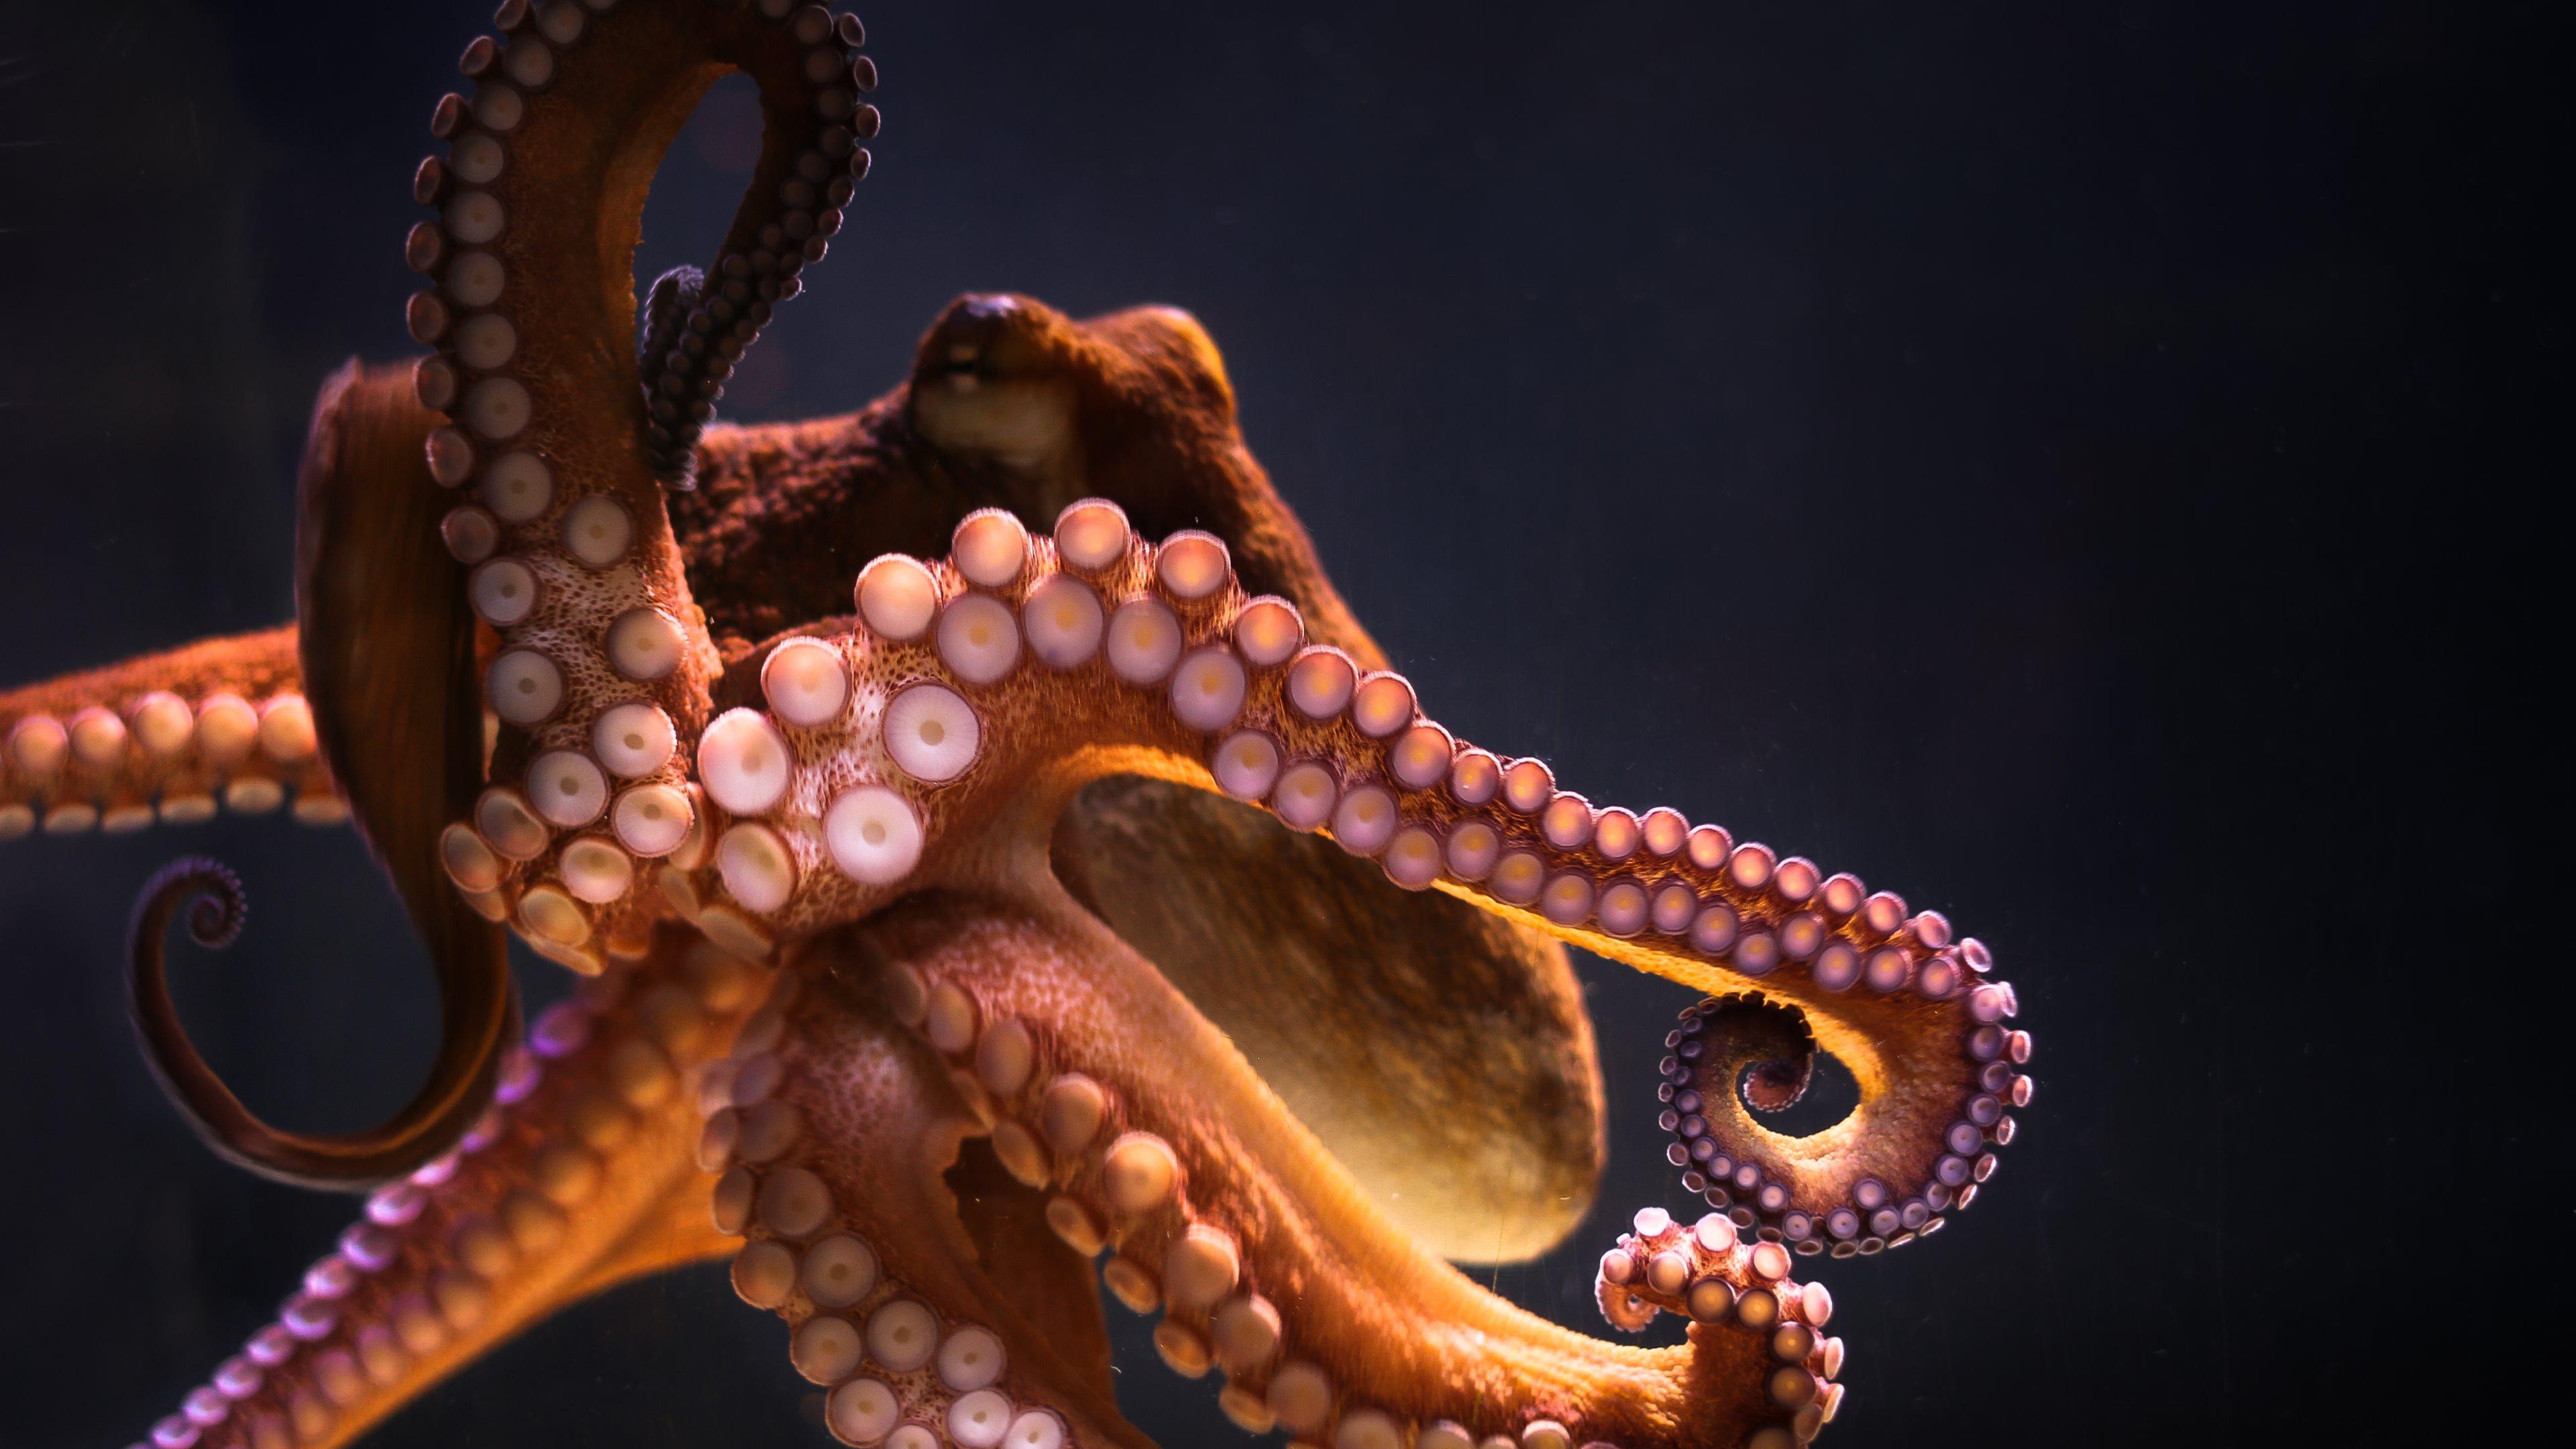 Octopus 4k Ultra HD Wallpaper